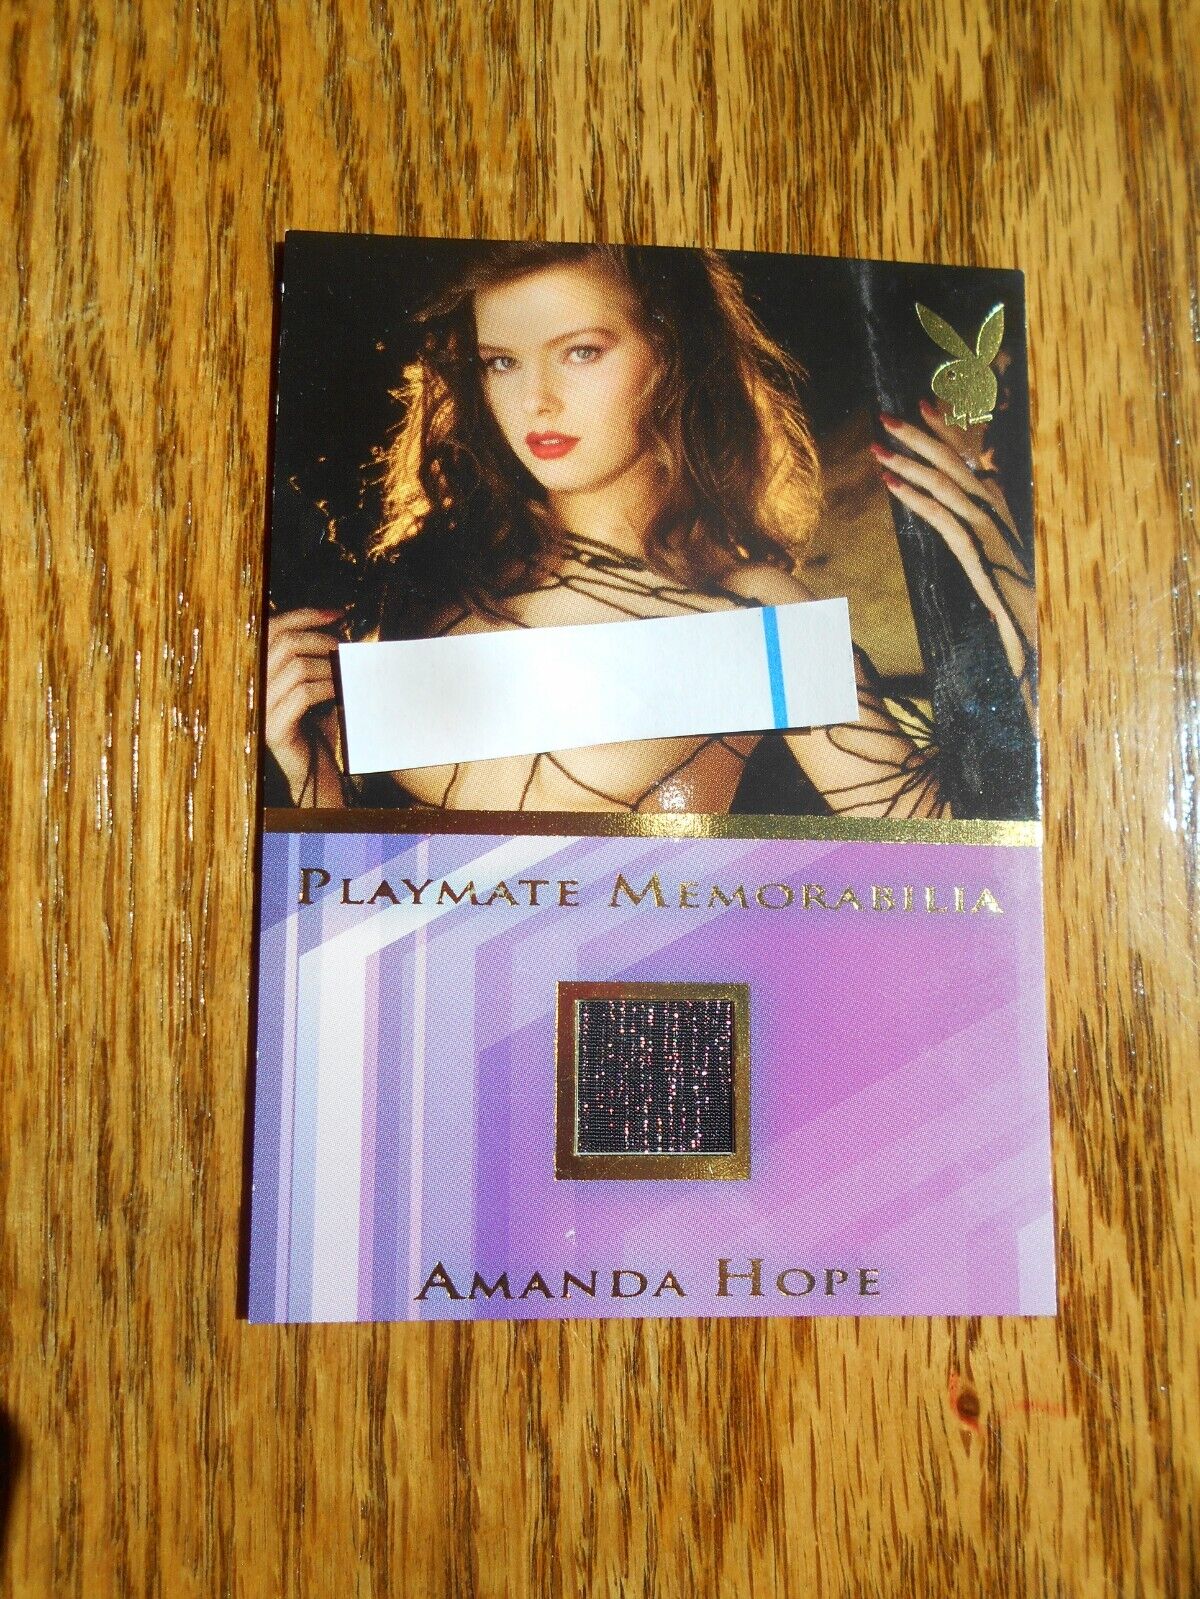 AMANDA HOPE 2017 PLAYBOY CARD playmate memorabilia cloth patch